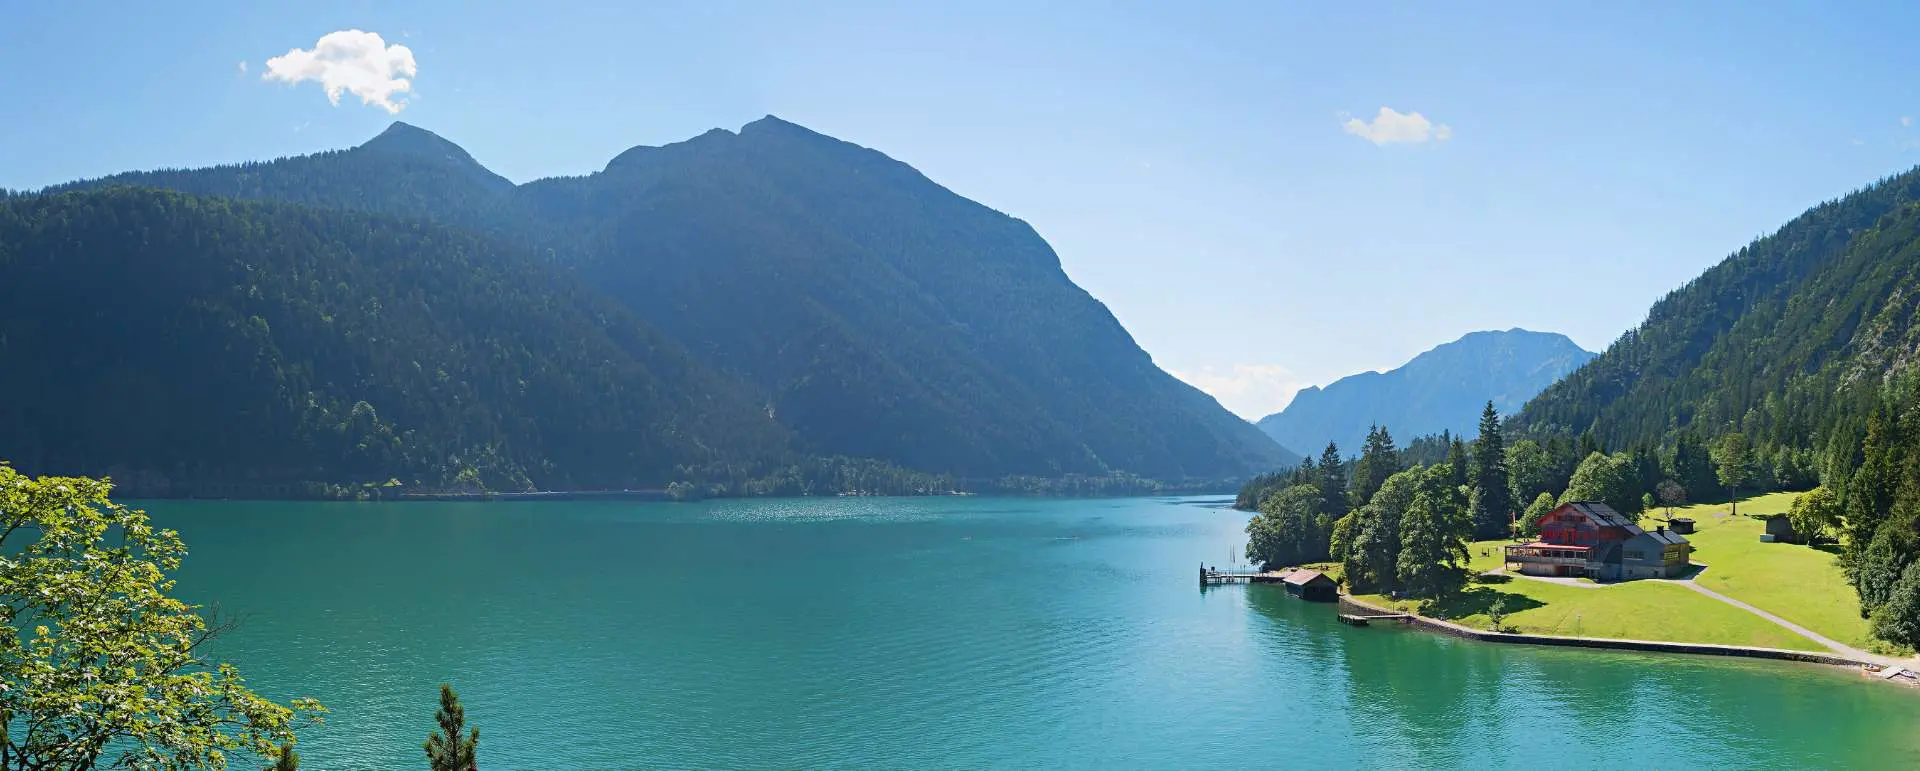 Achen Lake - the destination for group hotel for art workshops